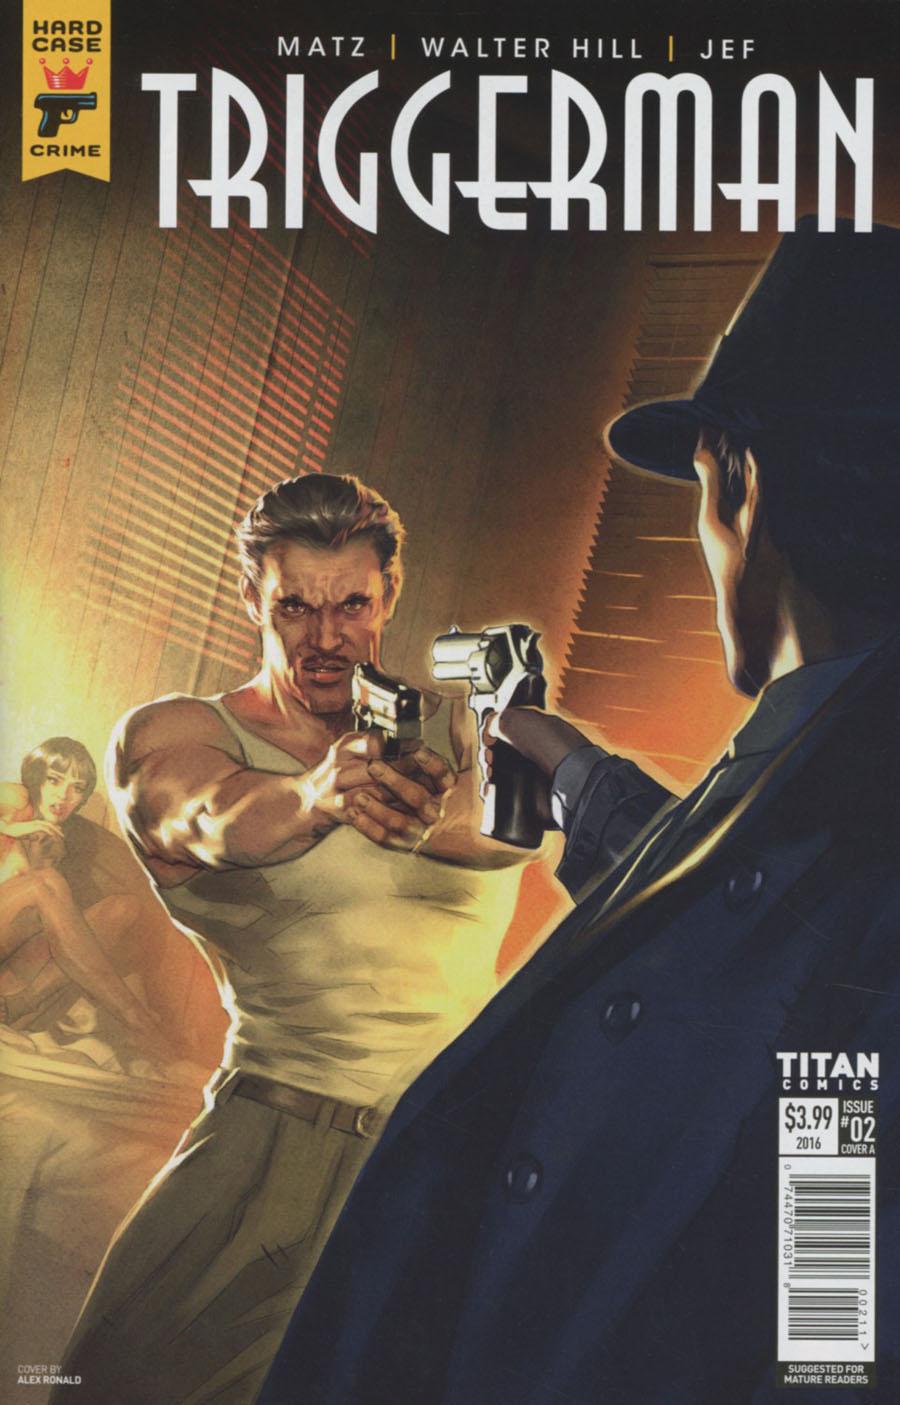 Hard Case Crime Triggerman Vol. 1 #2